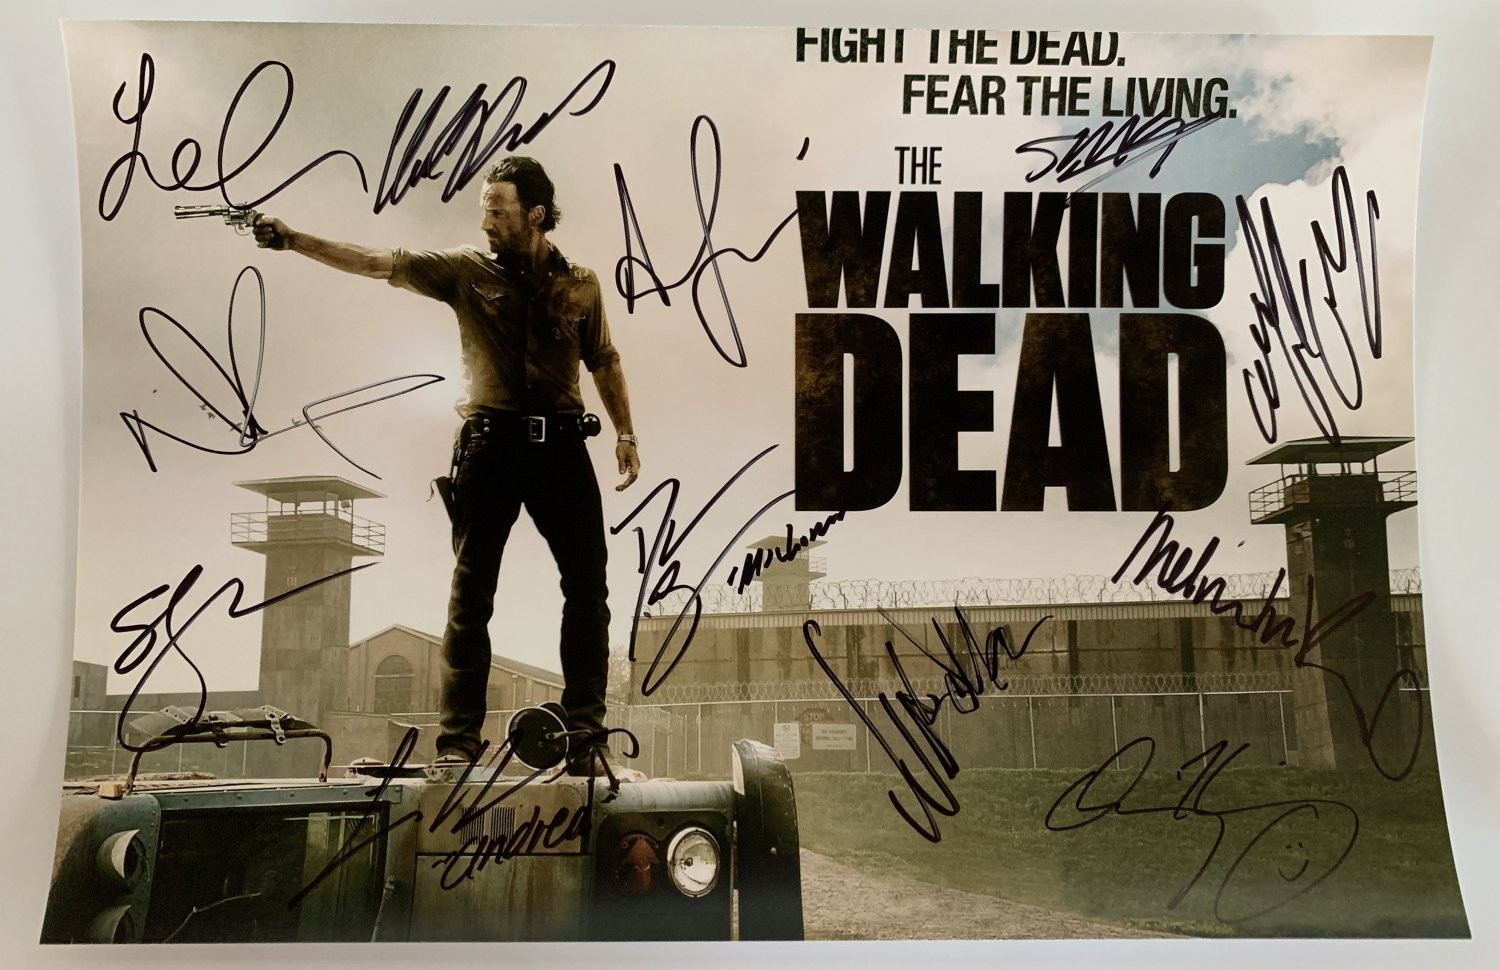 The Walking Dead Season Matte Finish Poster Paper Print